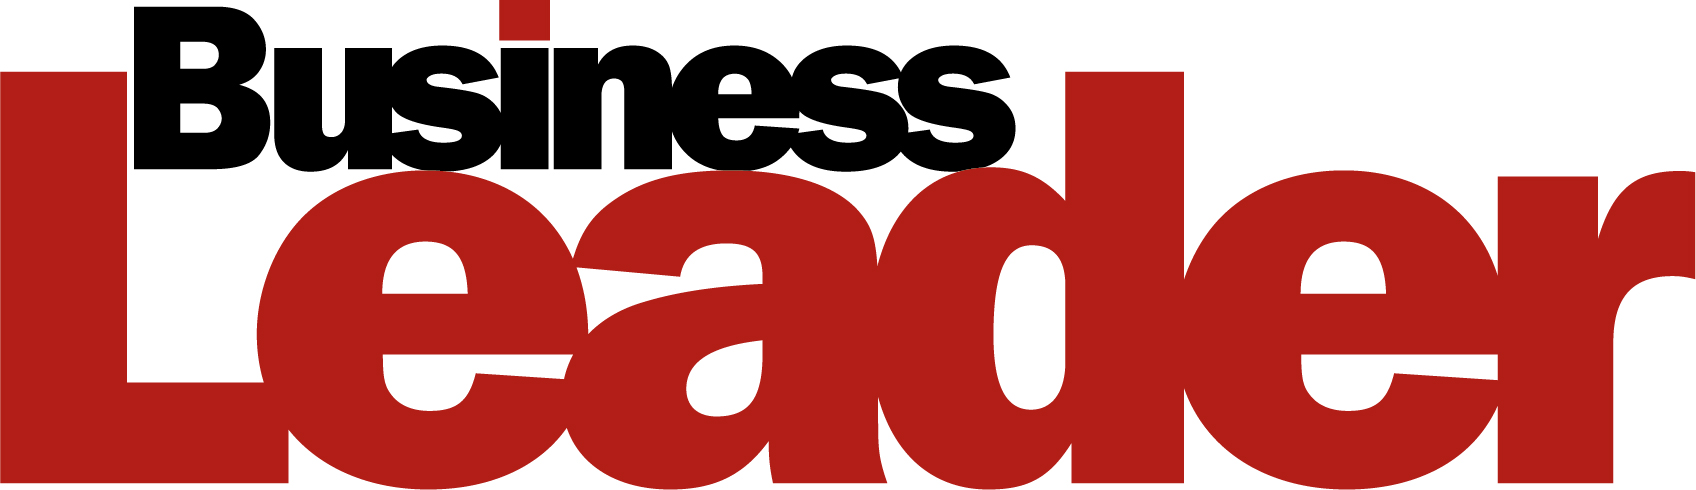 Business-Leader-logo